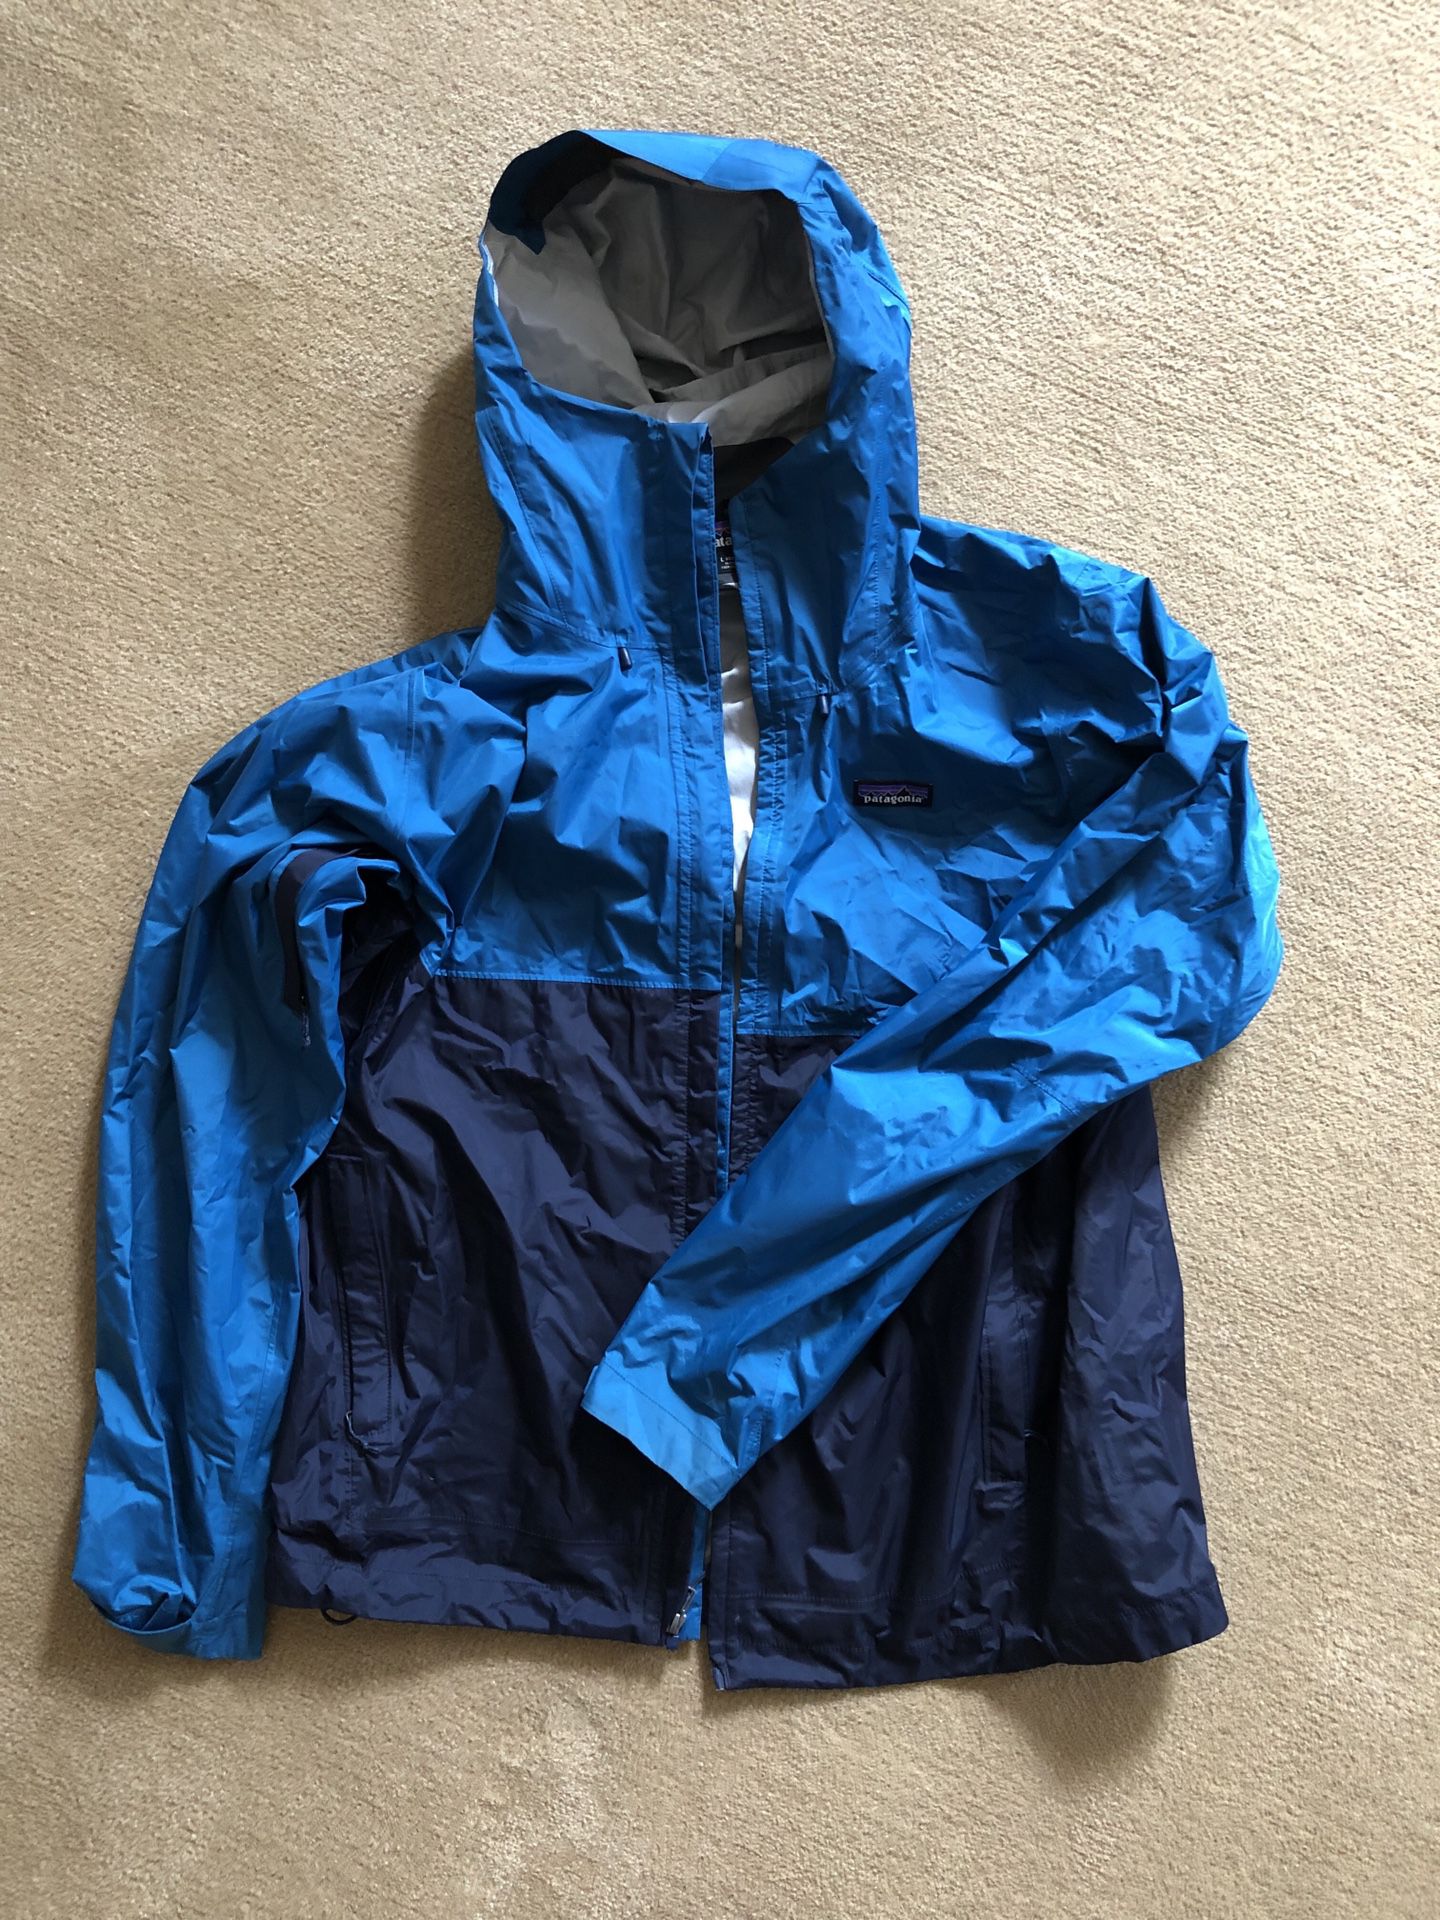 Patagonia Mens Rain Jacket size L